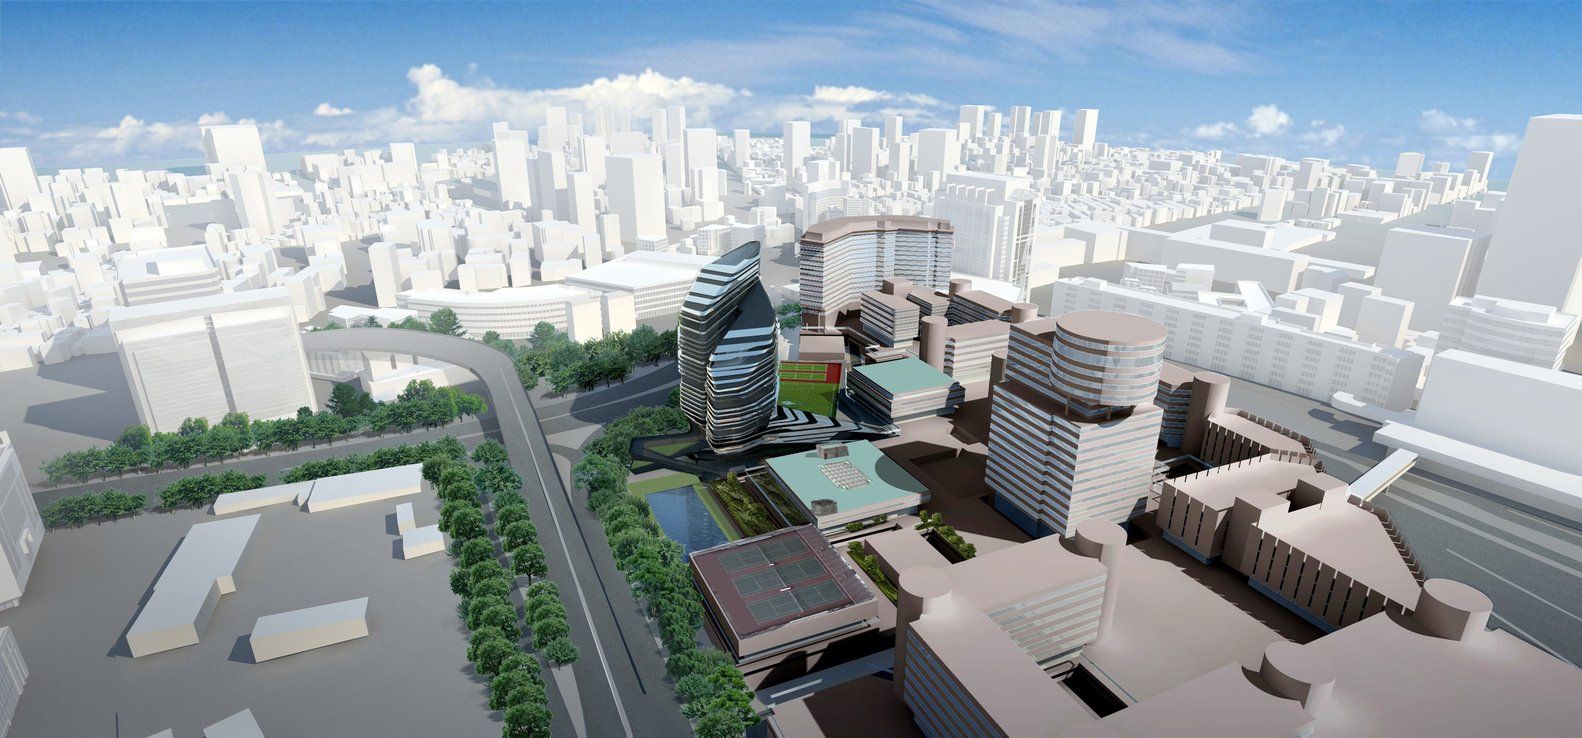 Zaha Hadid Architects - Innovation Tower Ceremony at Hong Kong